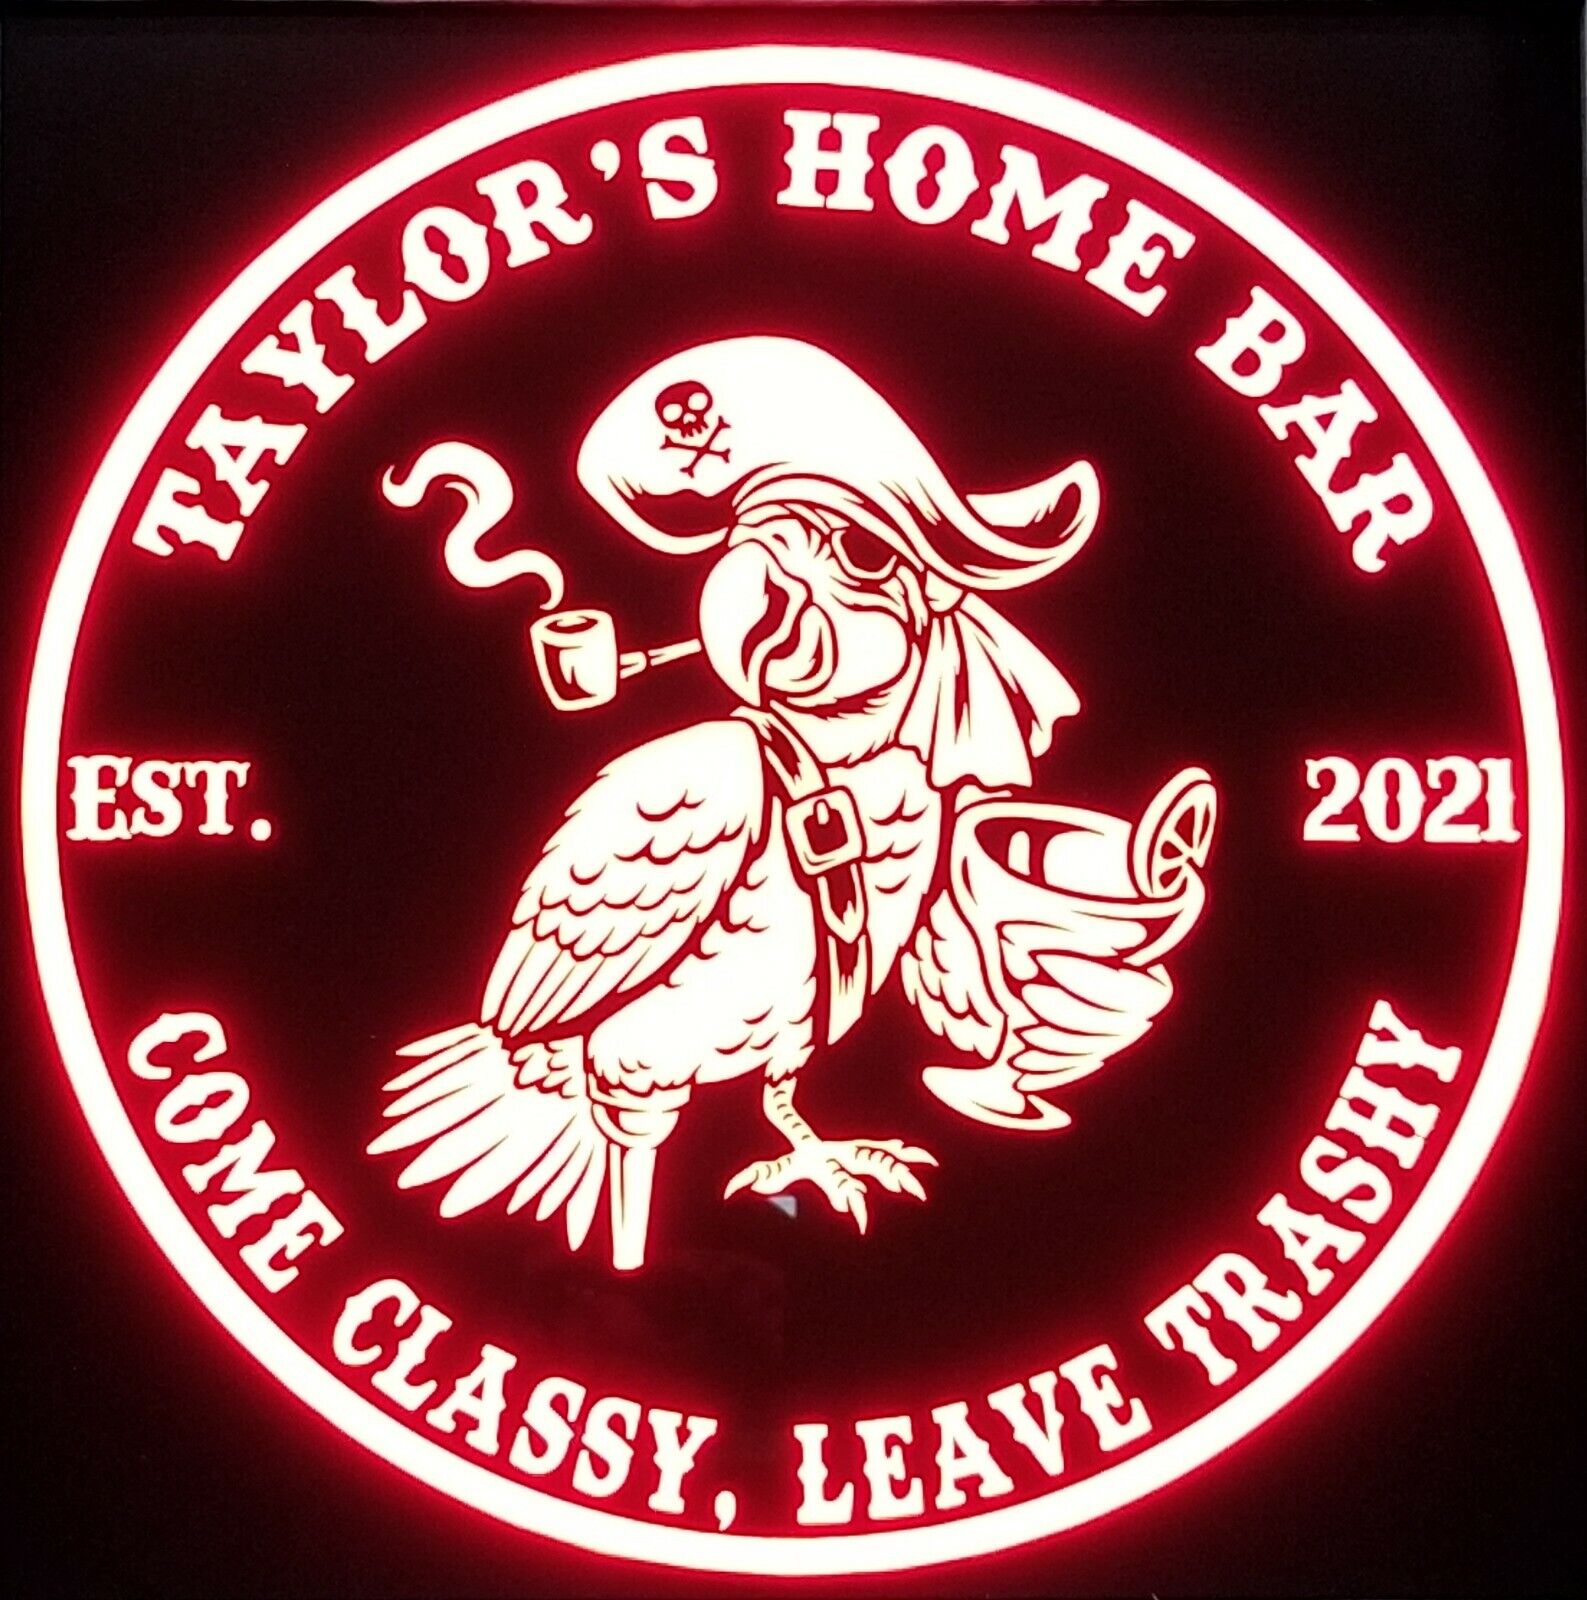 Custom Pirate Parrot Margarita LED Sign Personalized, Home bar Sign, Beer, Rum